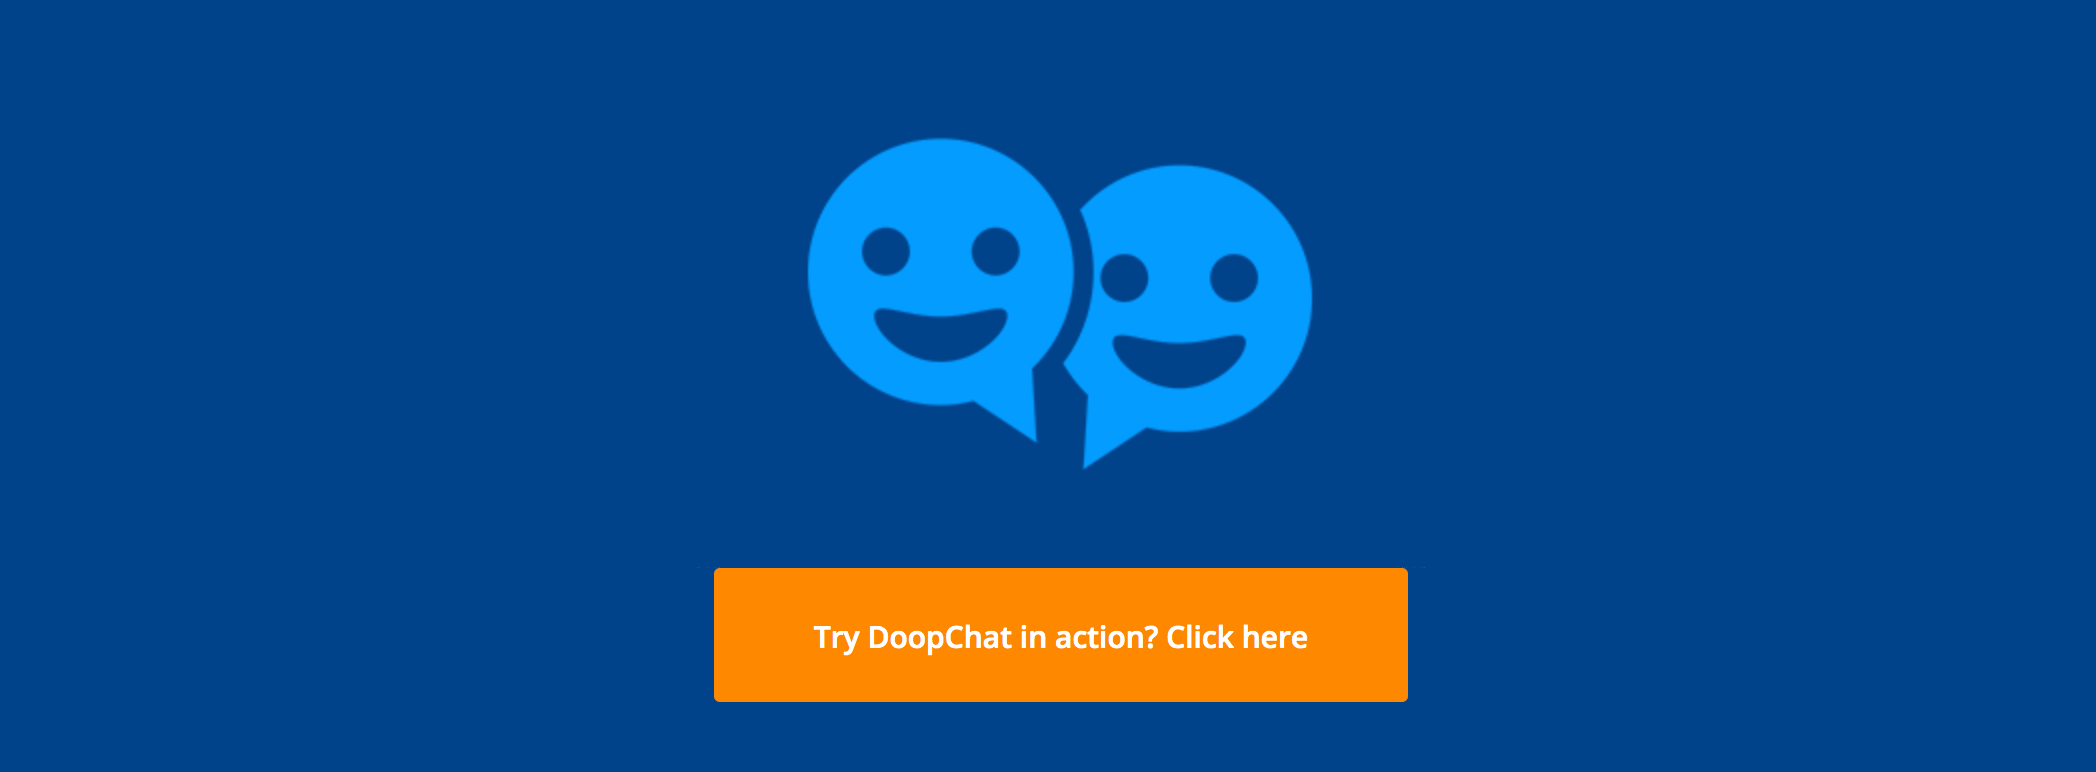 DoopChat auto responder for Facebook messenger